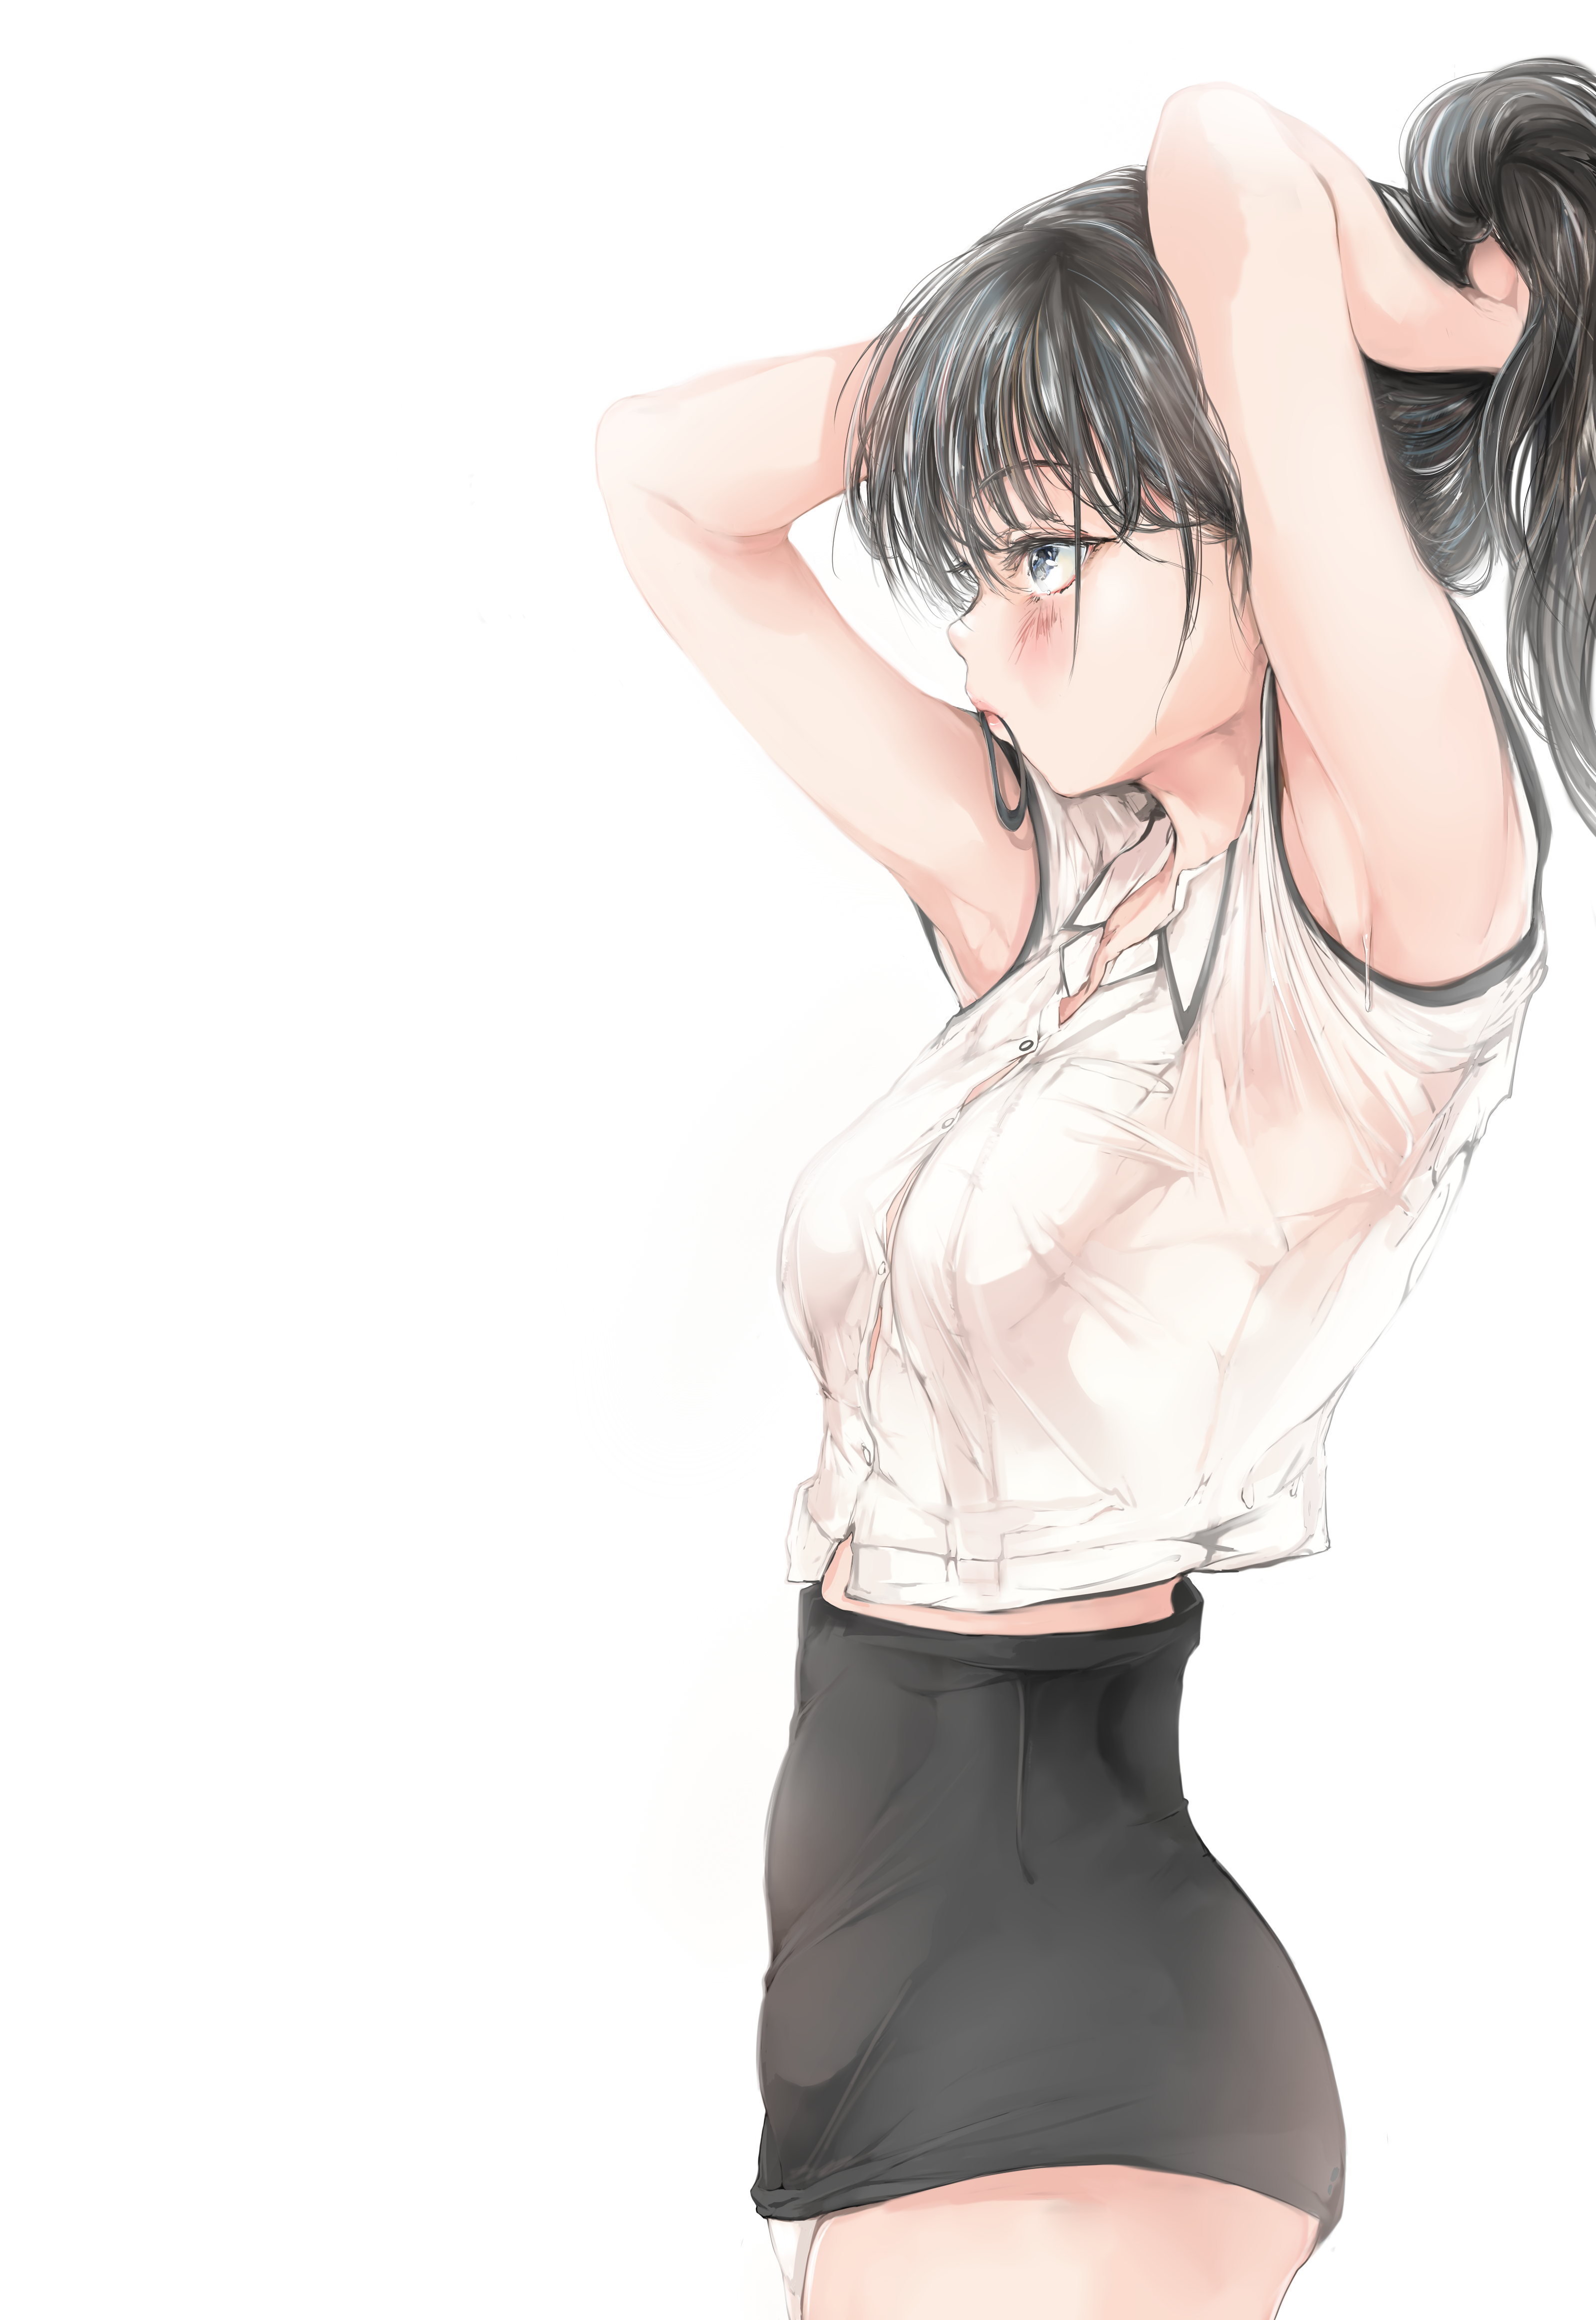 Anime 3193x4641 artwork sweaty body arms up anime girls dark hair Mamimi